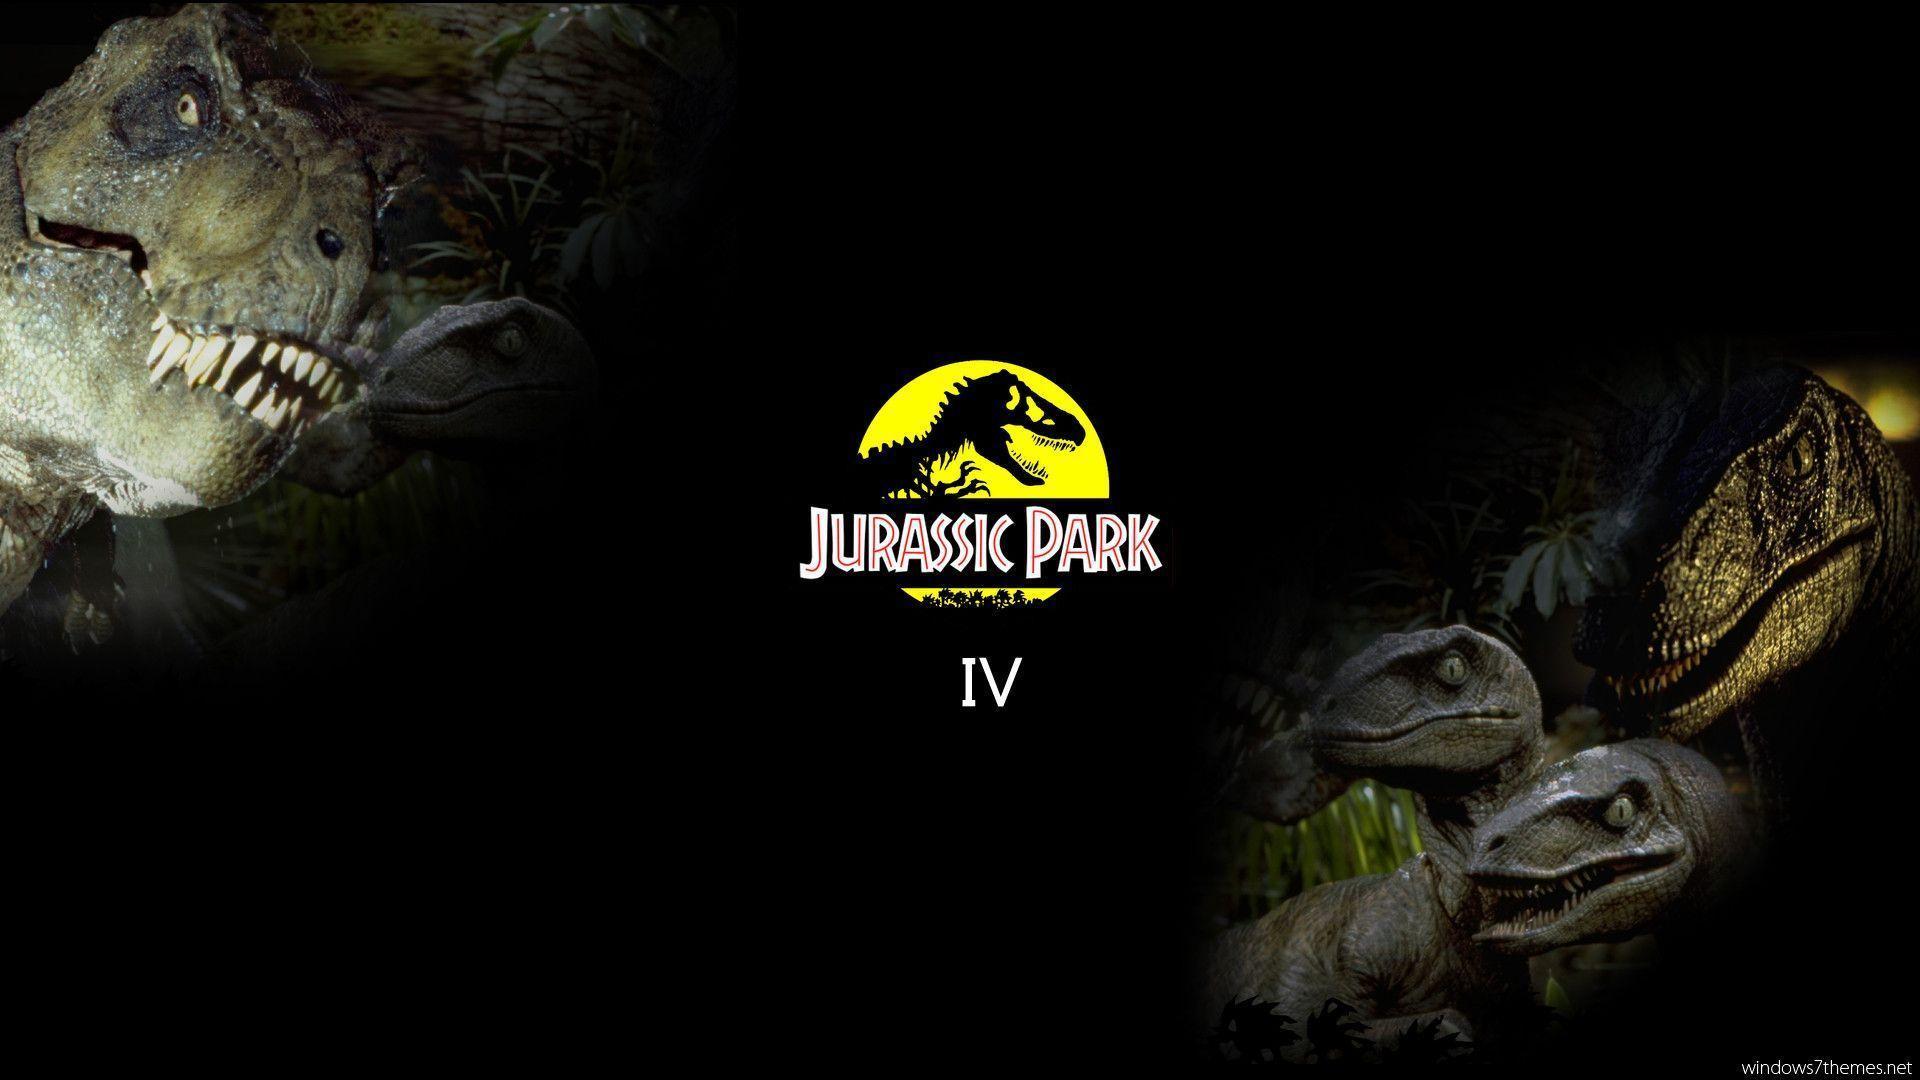 Jurassic Park 4 Wallpaper And Theme